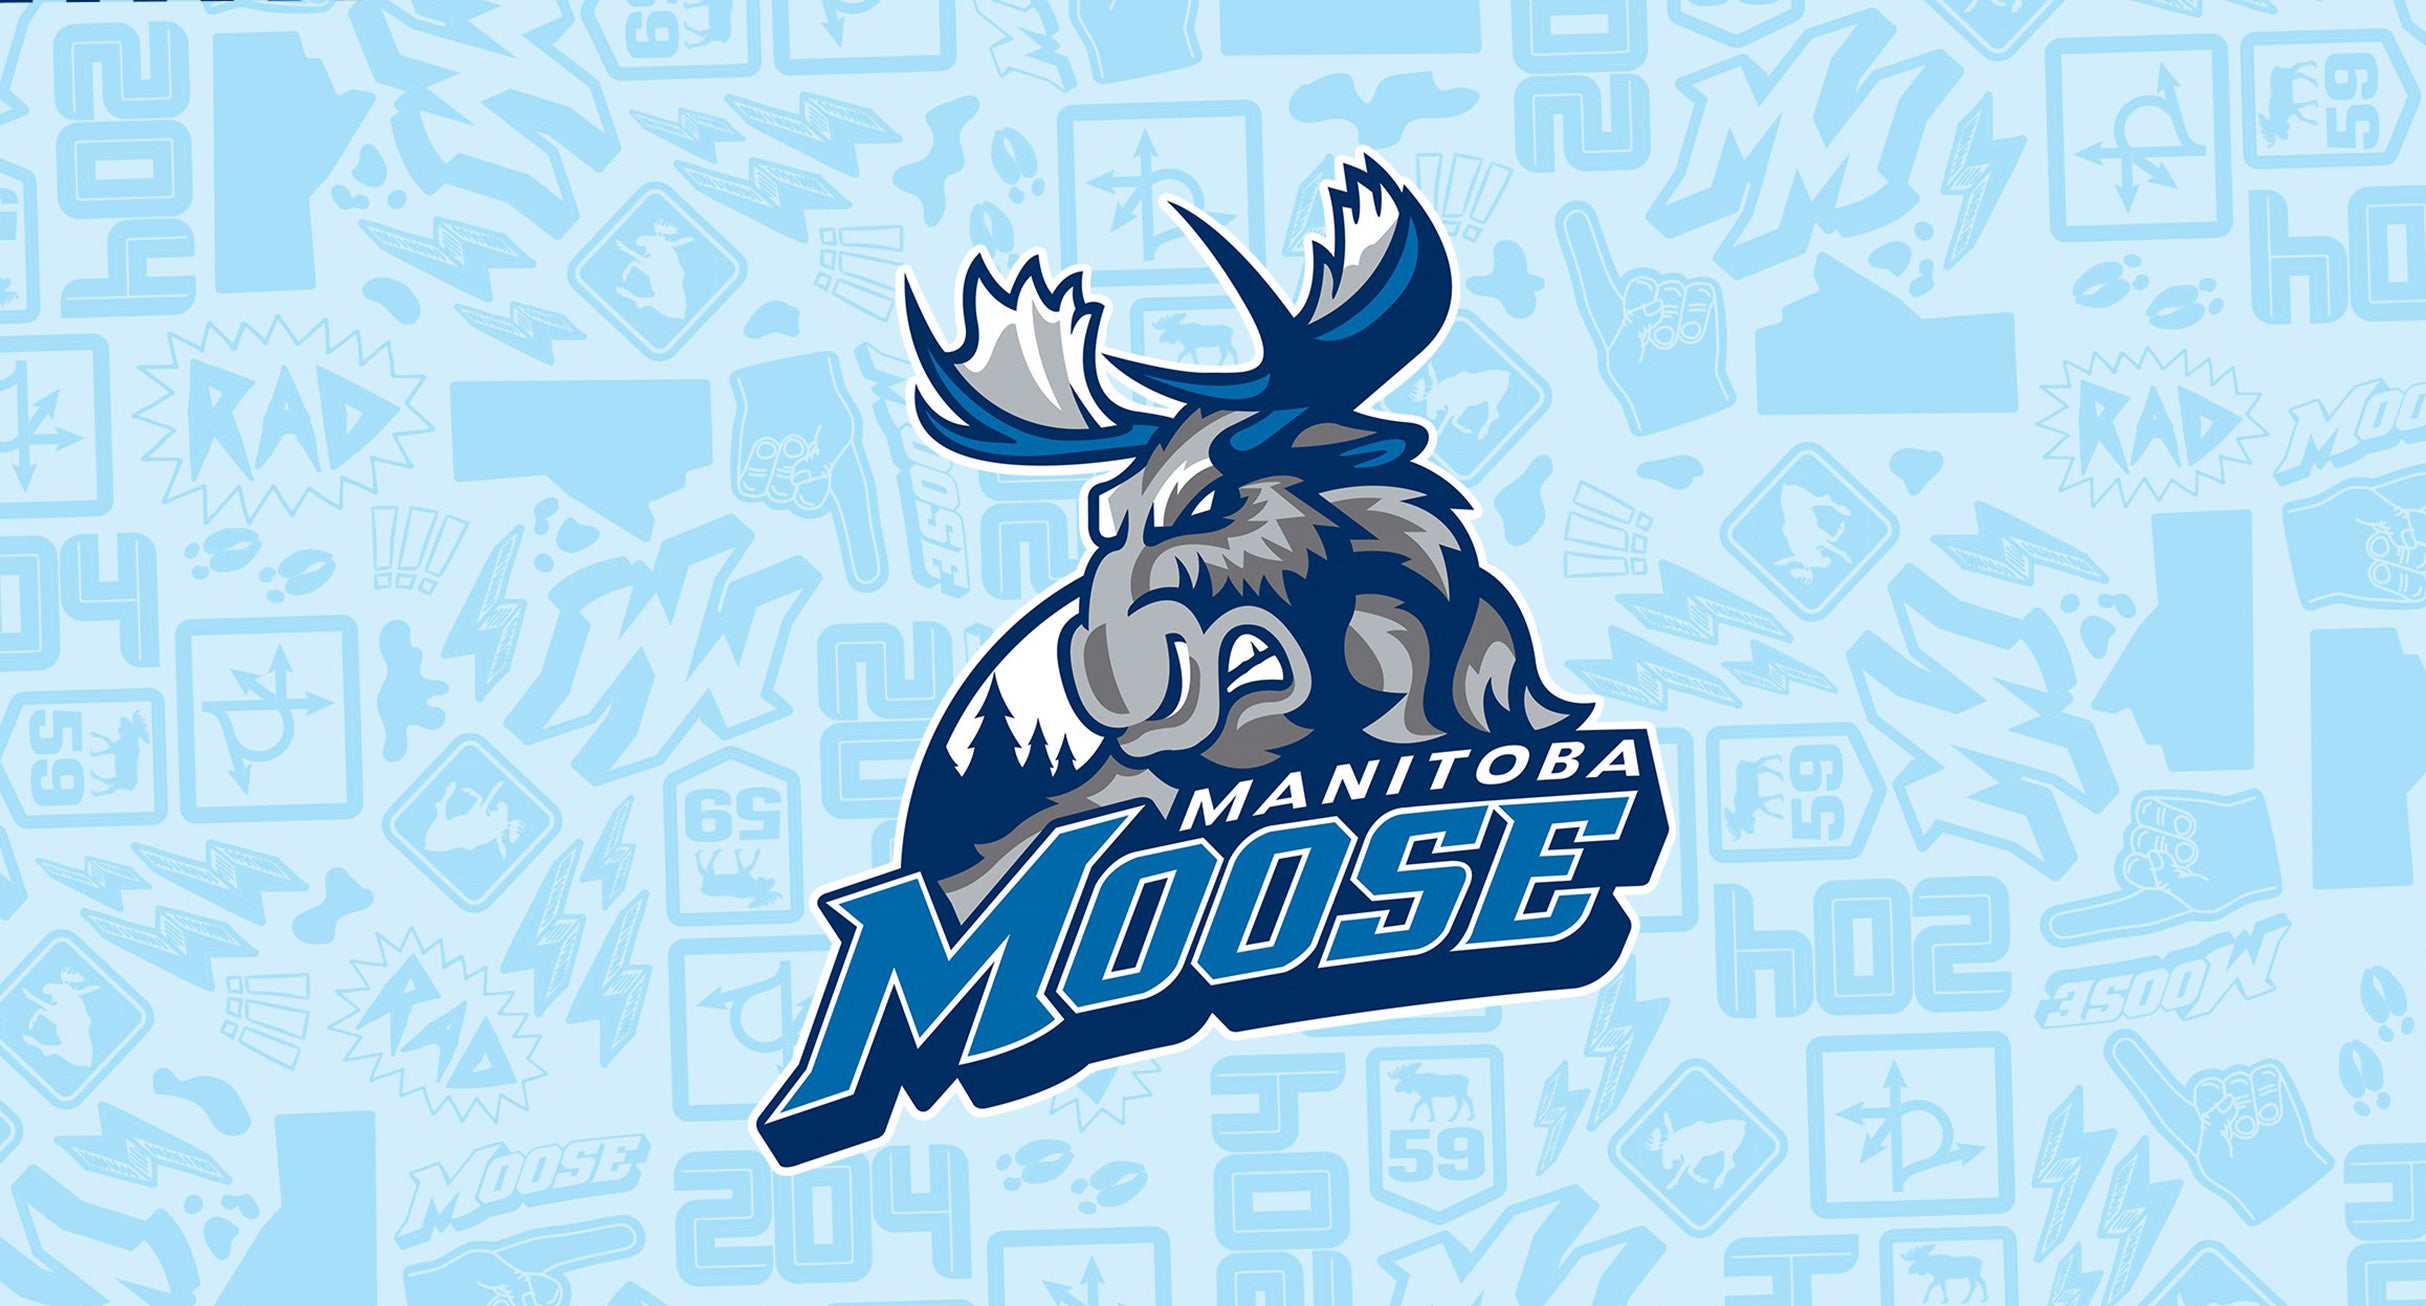 Manitoba Moose vs. Chicago Wolves in Winnipeg promo photo for Manitoba Moose presale offer code